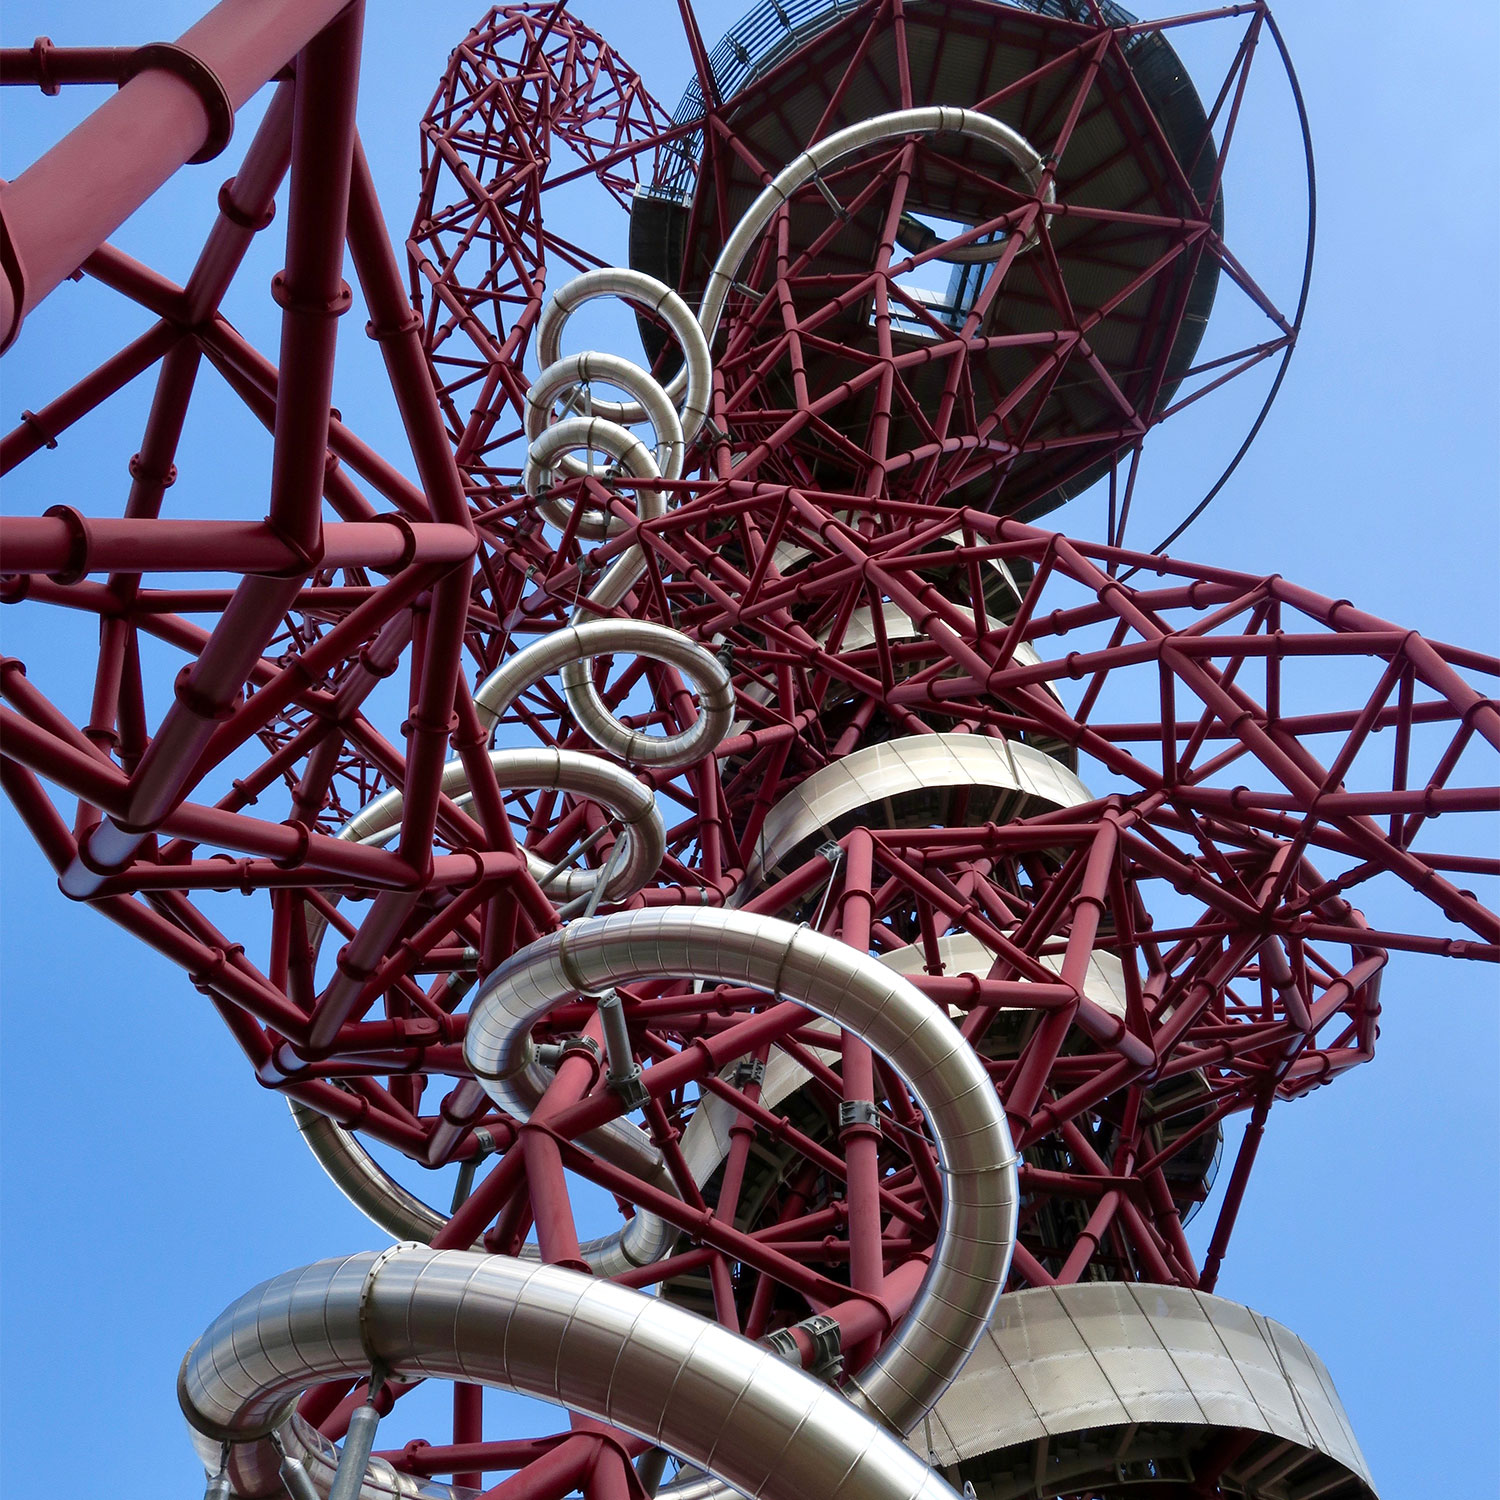 arcelormittal-orbit-london-olympic-park